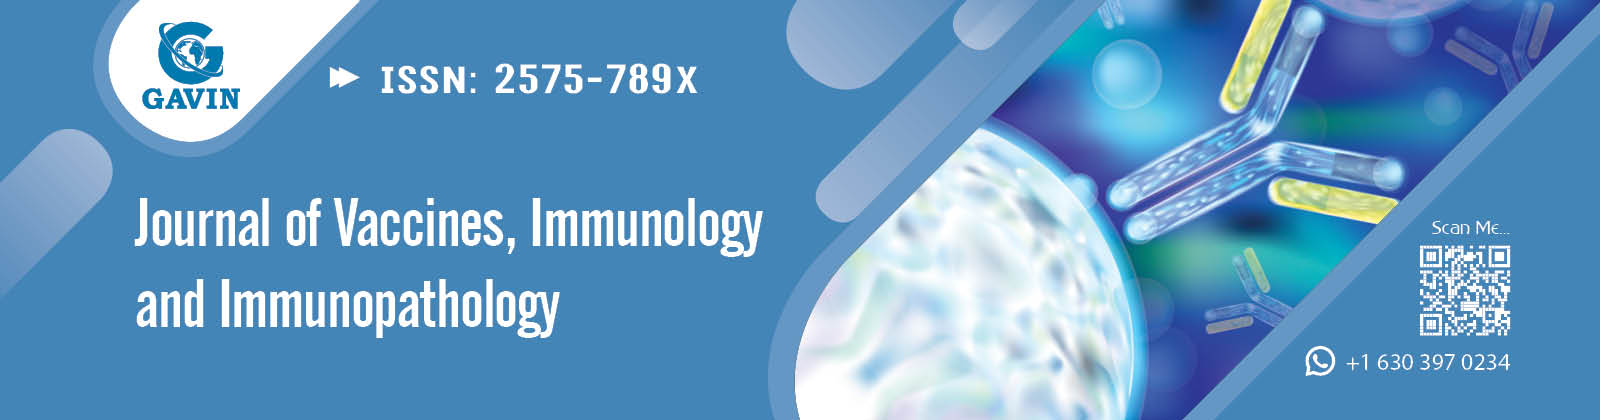 Journal of Vaccines, Immunology and Immunopathology